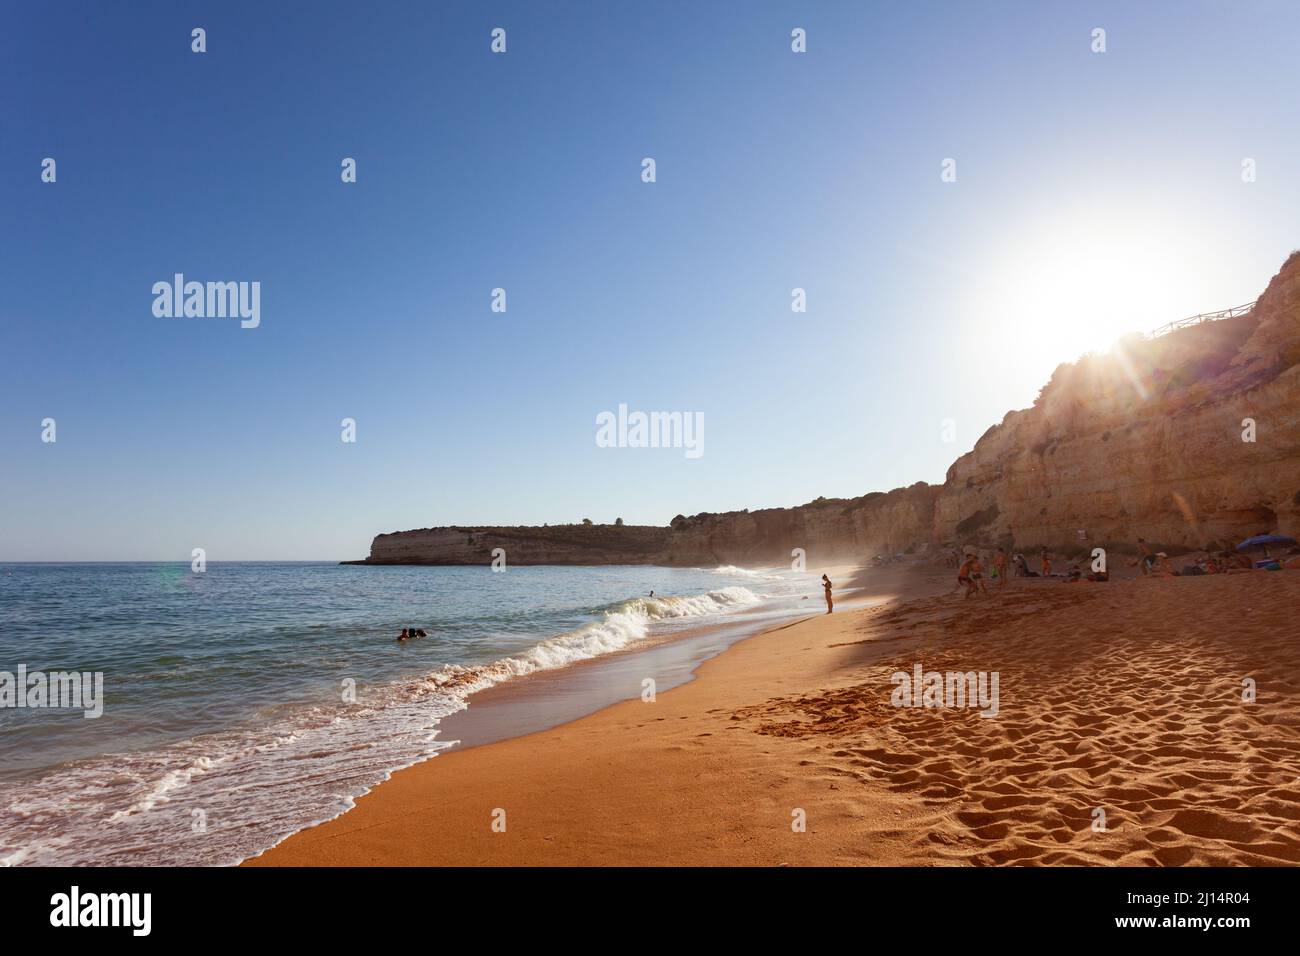 Praia Nova Beach, near the Portuguese seaside town of Armação de Pêra in the southern region of the Algarve, Portugal. Stock Photo